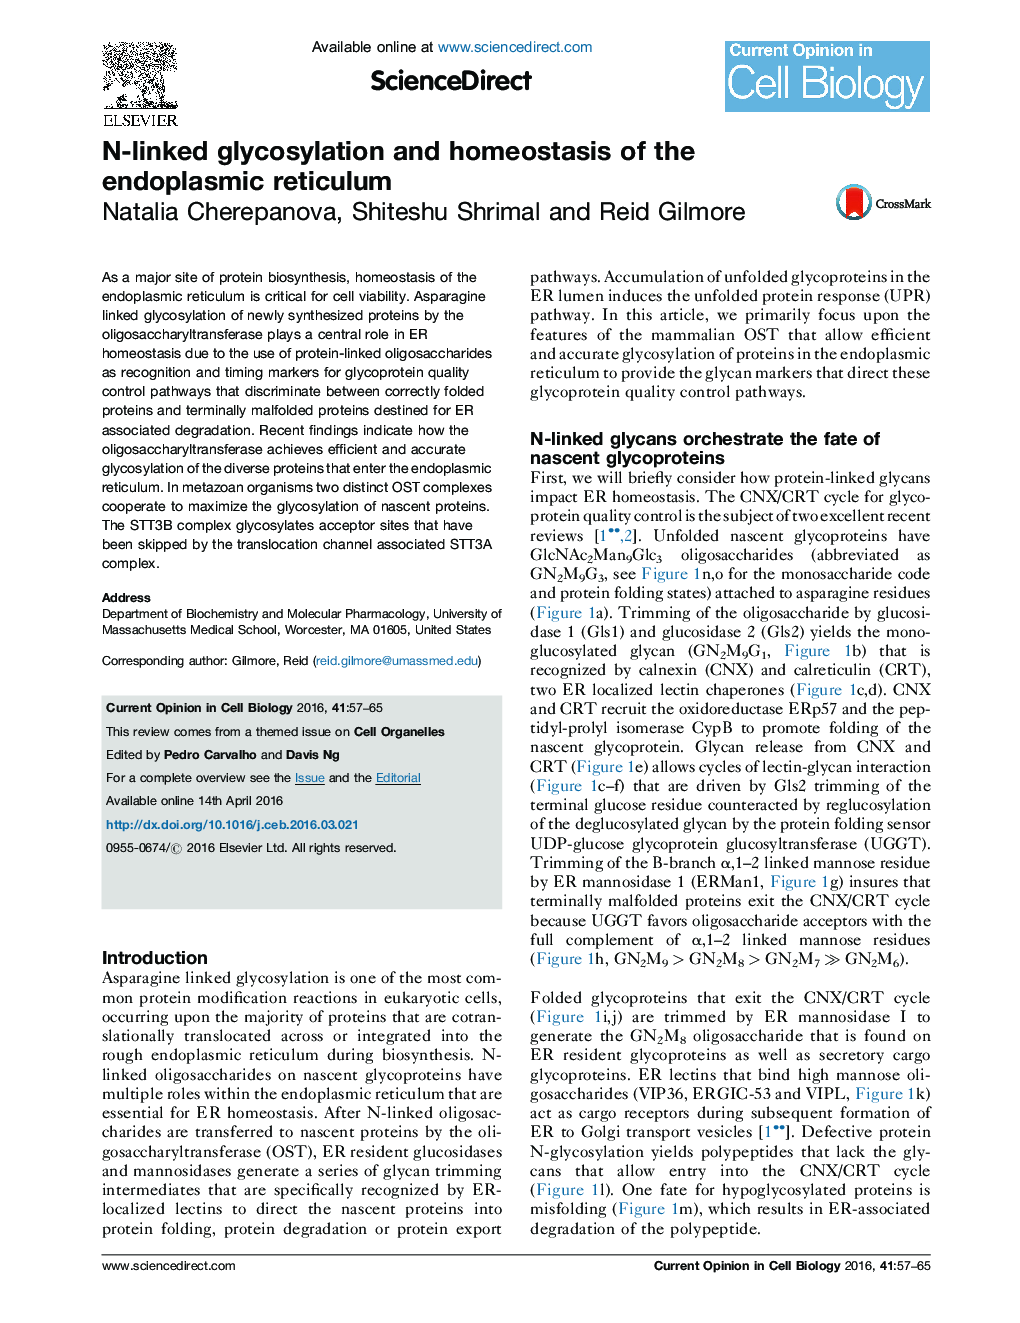 N-linked glycosylation and homeostasis of the endoplasmic reticulum